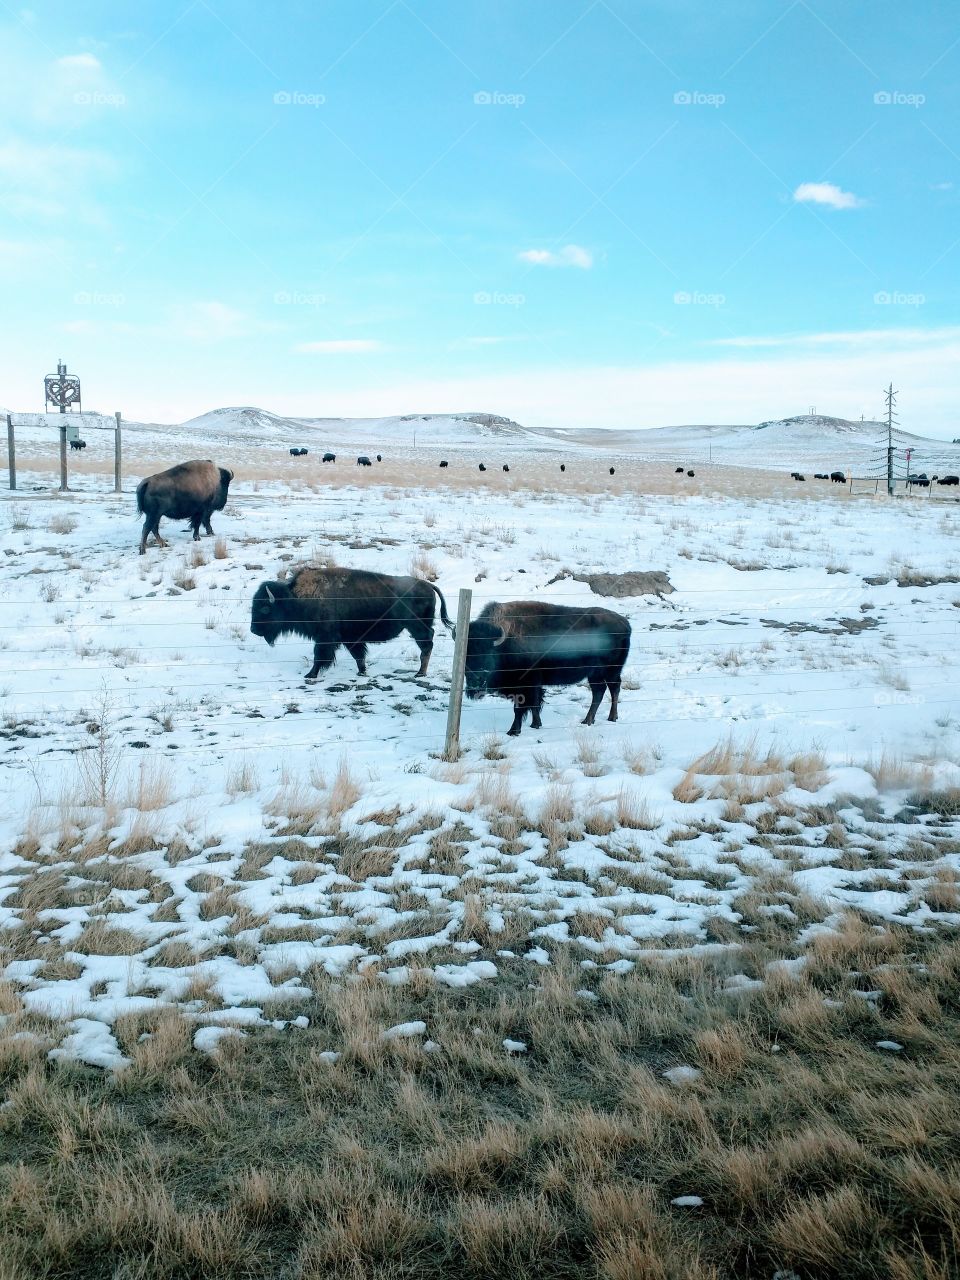 Buffalo in the snow.